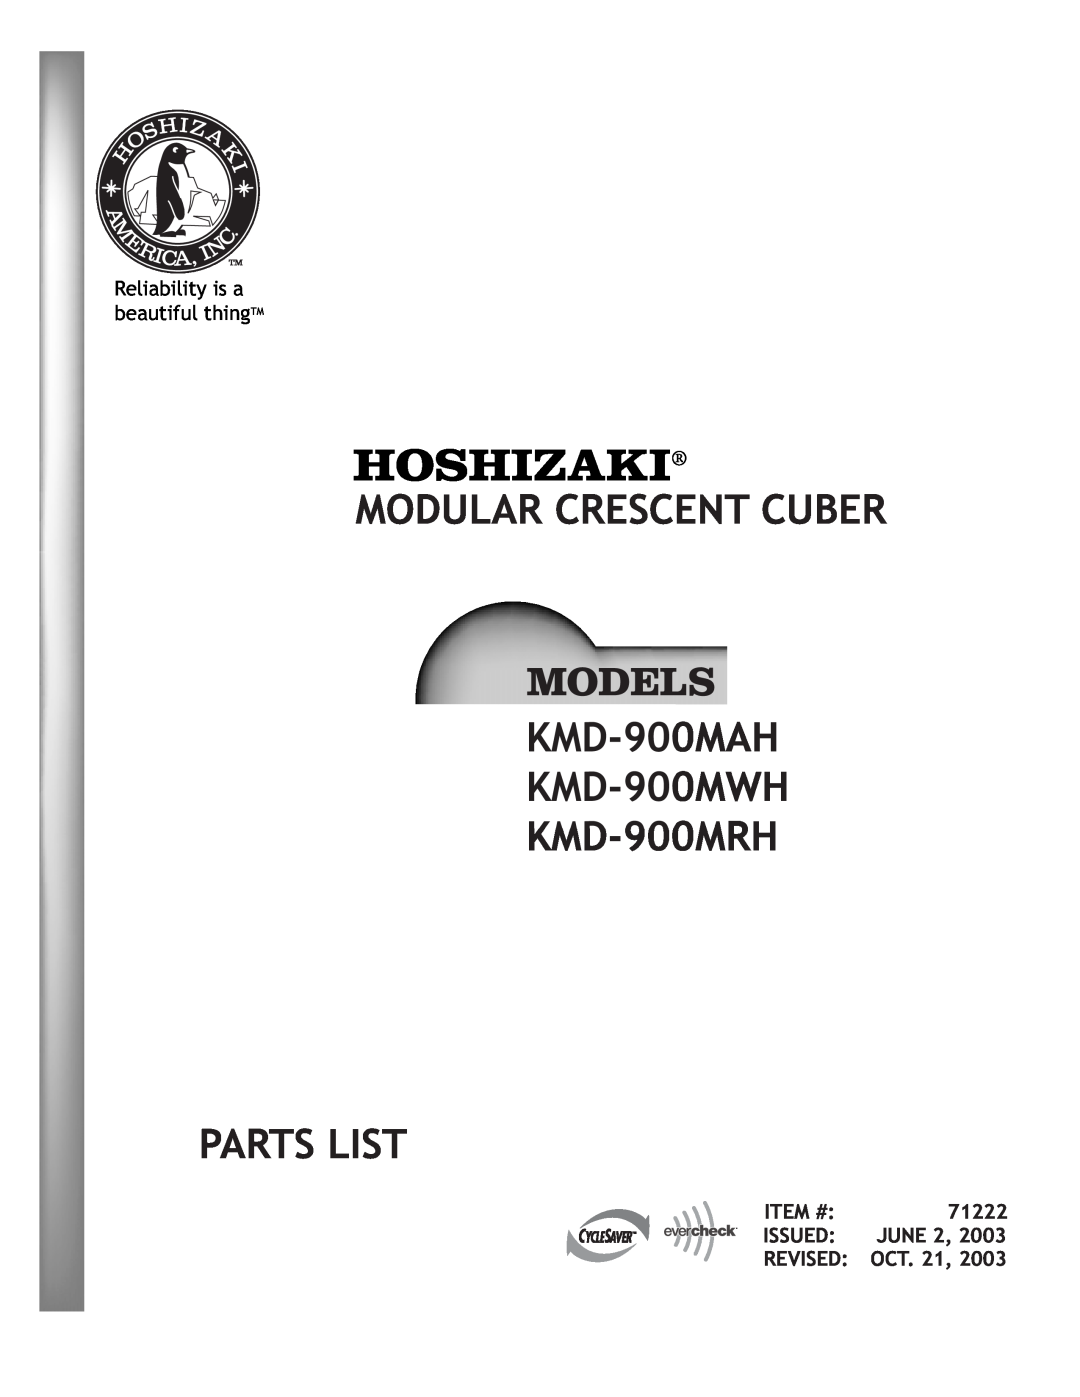 Hoshizaki manual MODULAR CRESCENT CUBER KMD-900MAH KMD-900MWH KMD-900MRH PARTS LIST, Reliability is a beautiful thingTM 